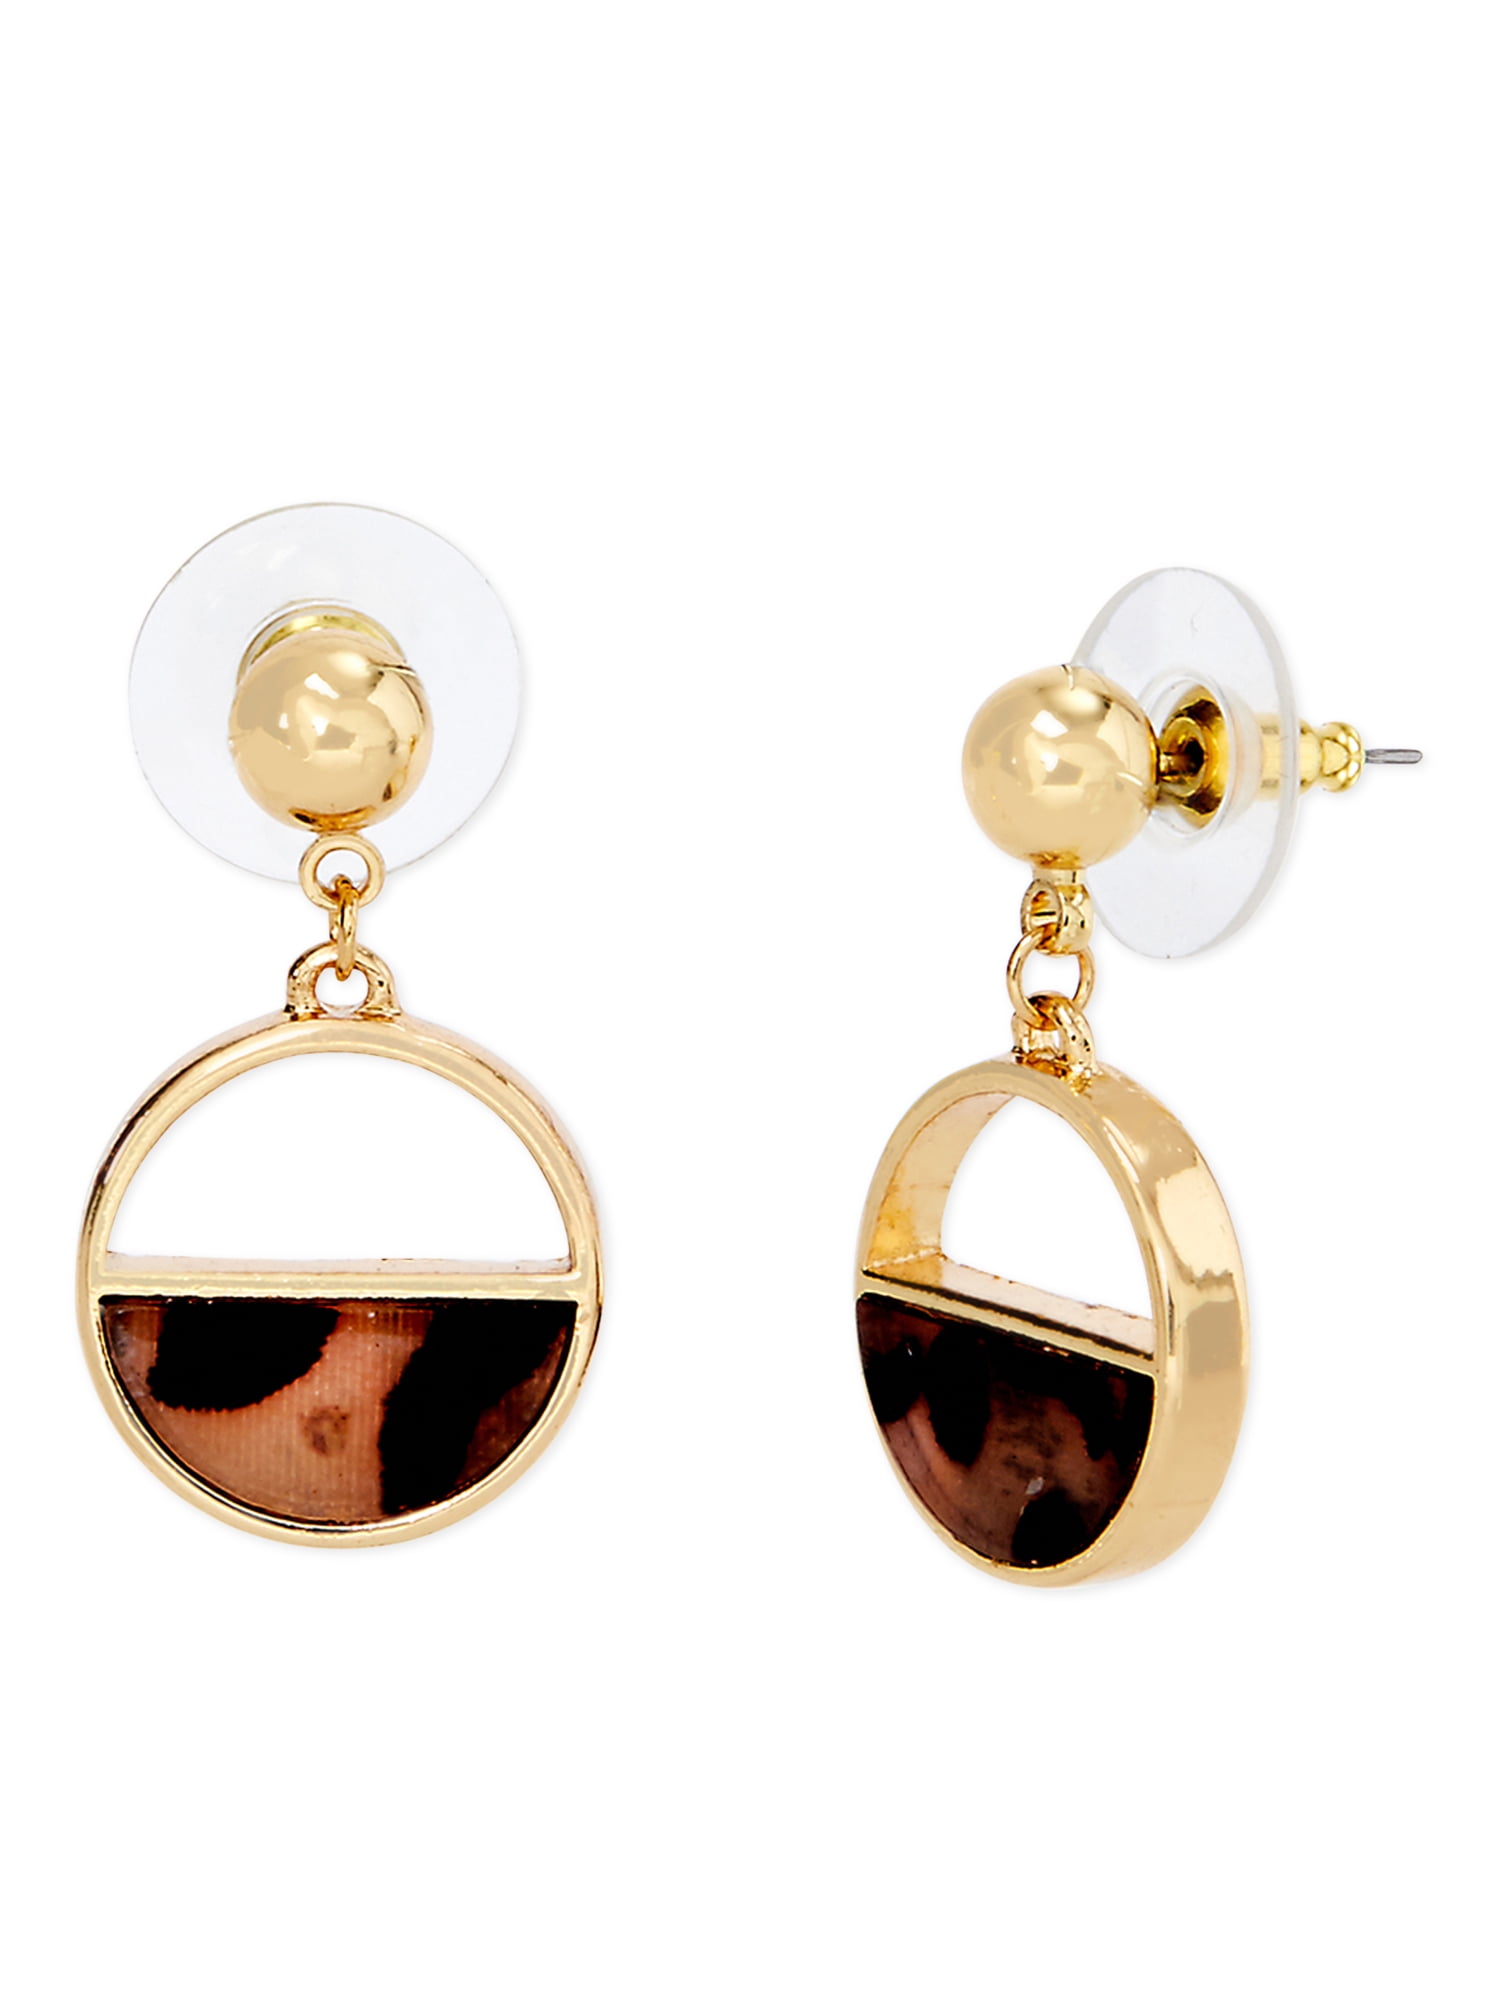 Gemstones earrings Brass Metalwork earrings  Long Dangle earrings Rustic  earrings  Hammered brass jewelry Christmas Gift